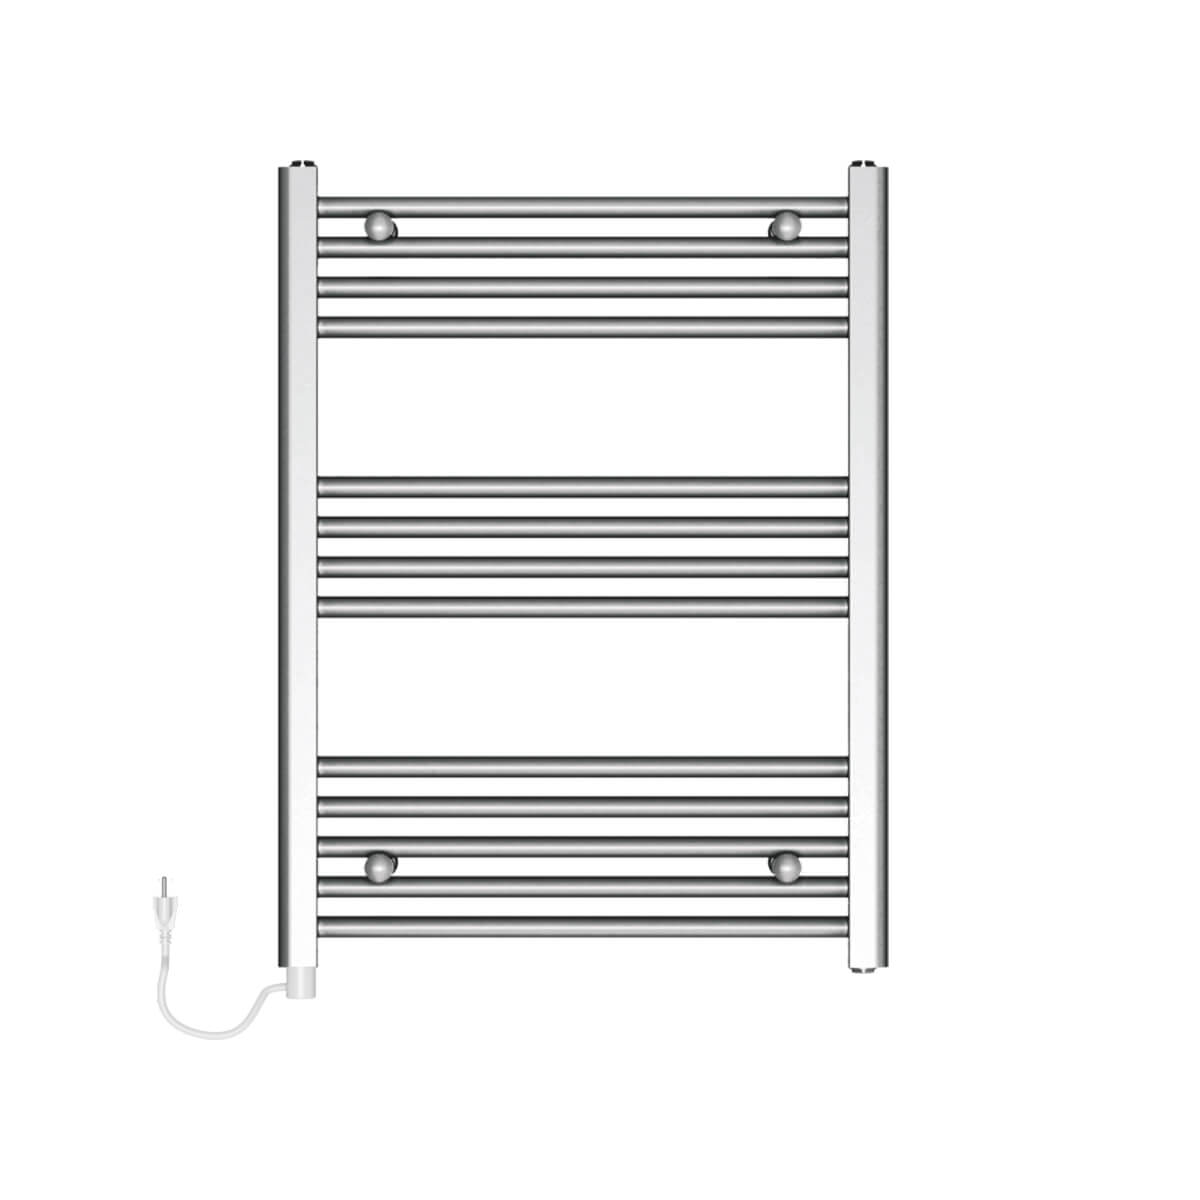 Toalheiro Elétrico HAEGER Full Warm 120x50 cm, Branco, 700 W, Controlo  Digital - HAEGER Home Appliances